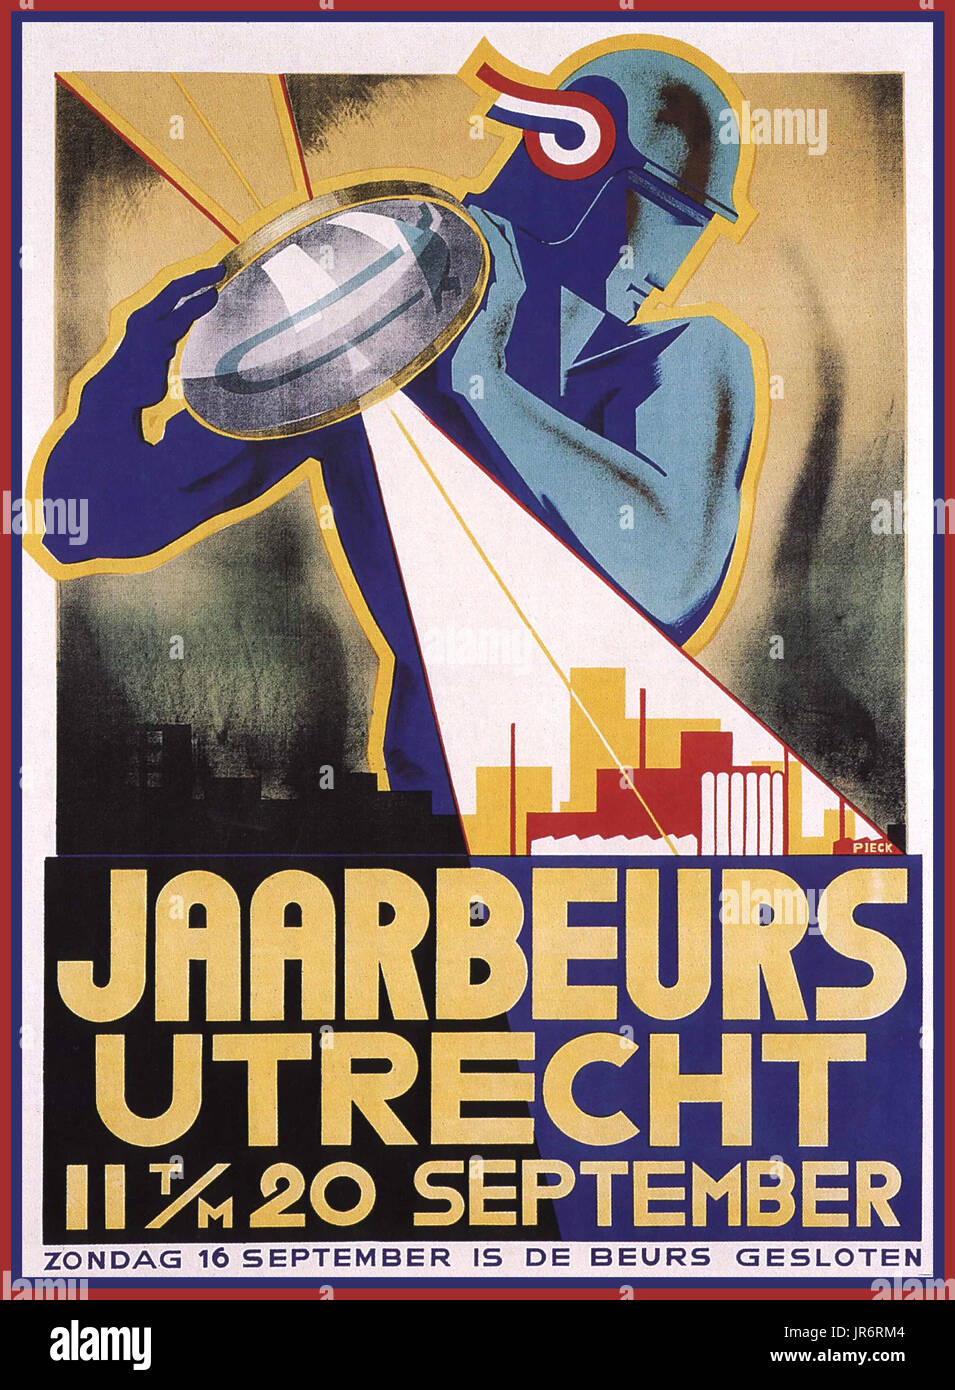 En la Feria de Utrecht Jaarbeeurs Art Deco Vintage Poster de un superhéroe futurista impreso en 1920's-1930's Foto de stock